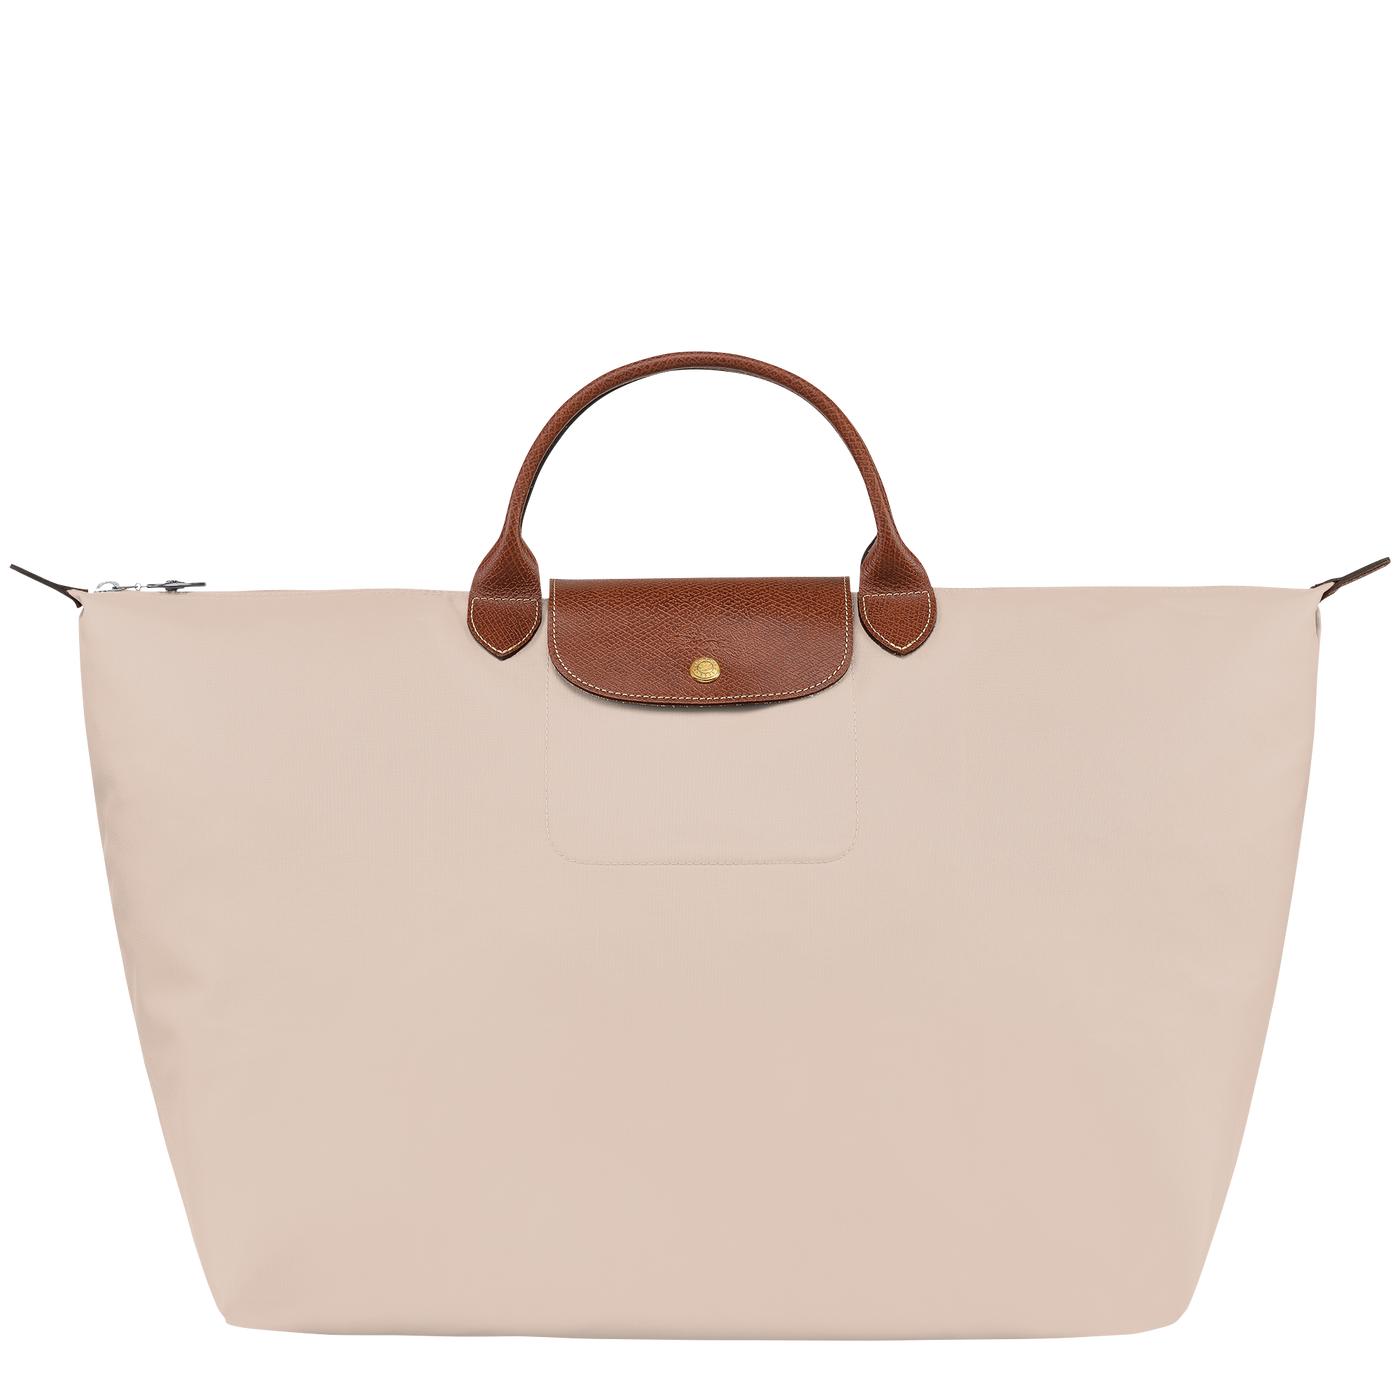 Shop The Latest Collection Of Longchamp Le Pliage Original Travel Bag L - L1624089 In Lebanon